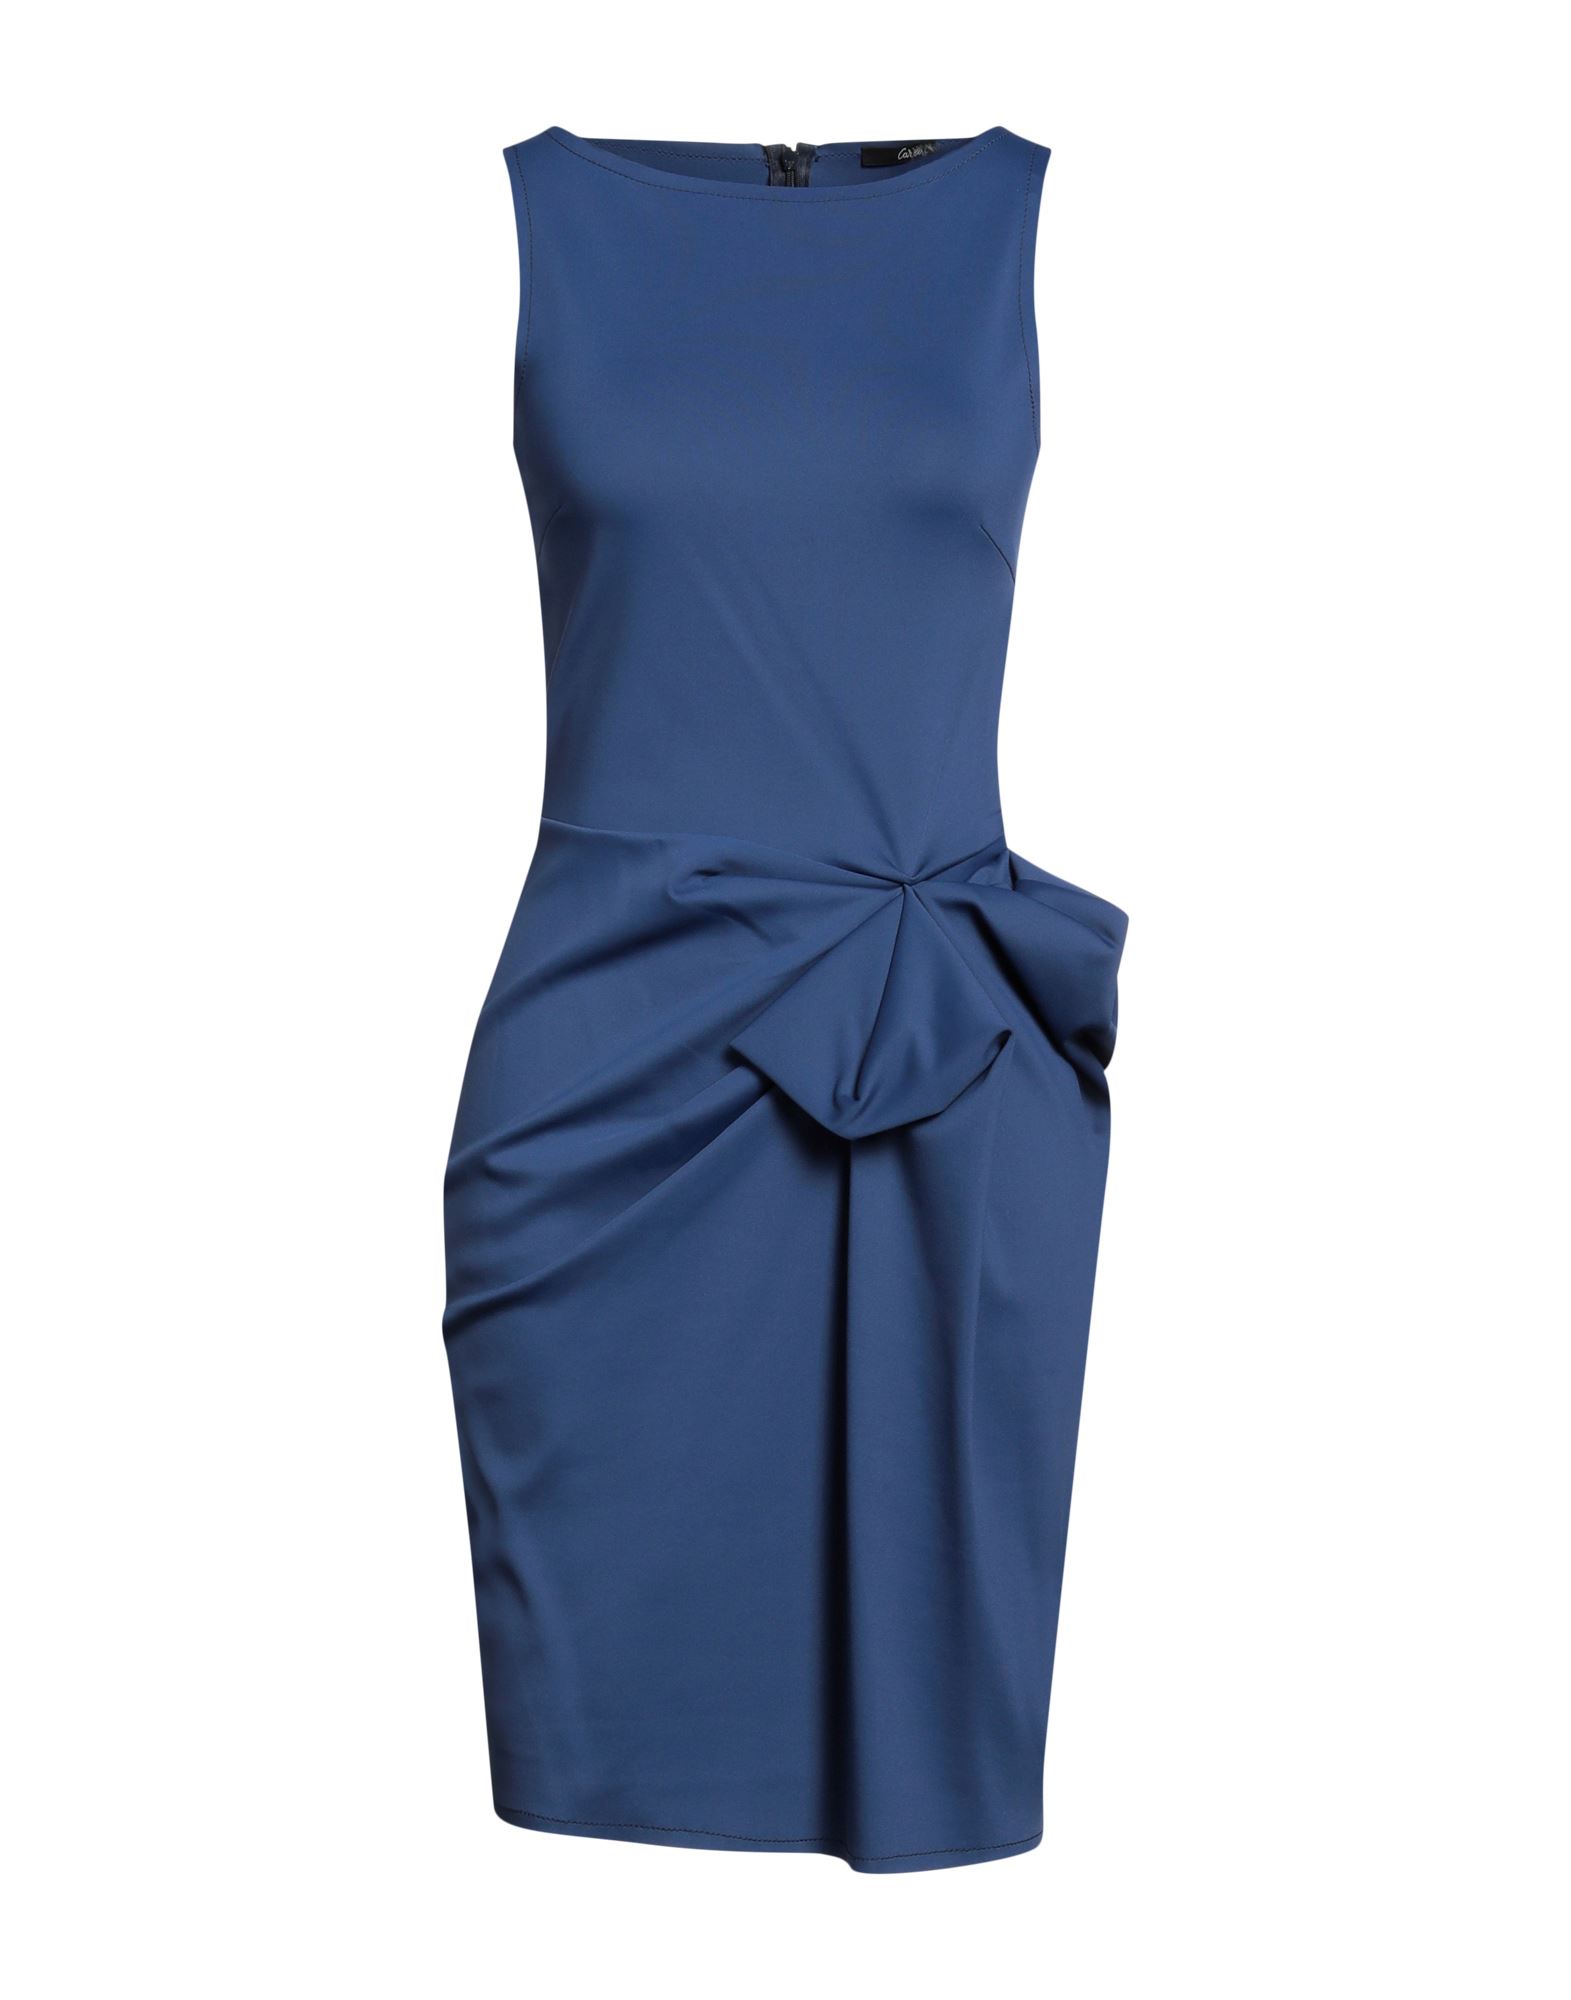 CARLA G. CARLA G. WOMAN SHORT DRESS NAVY BLUE SIZE 4 POLYAMIDE, ELASTANE